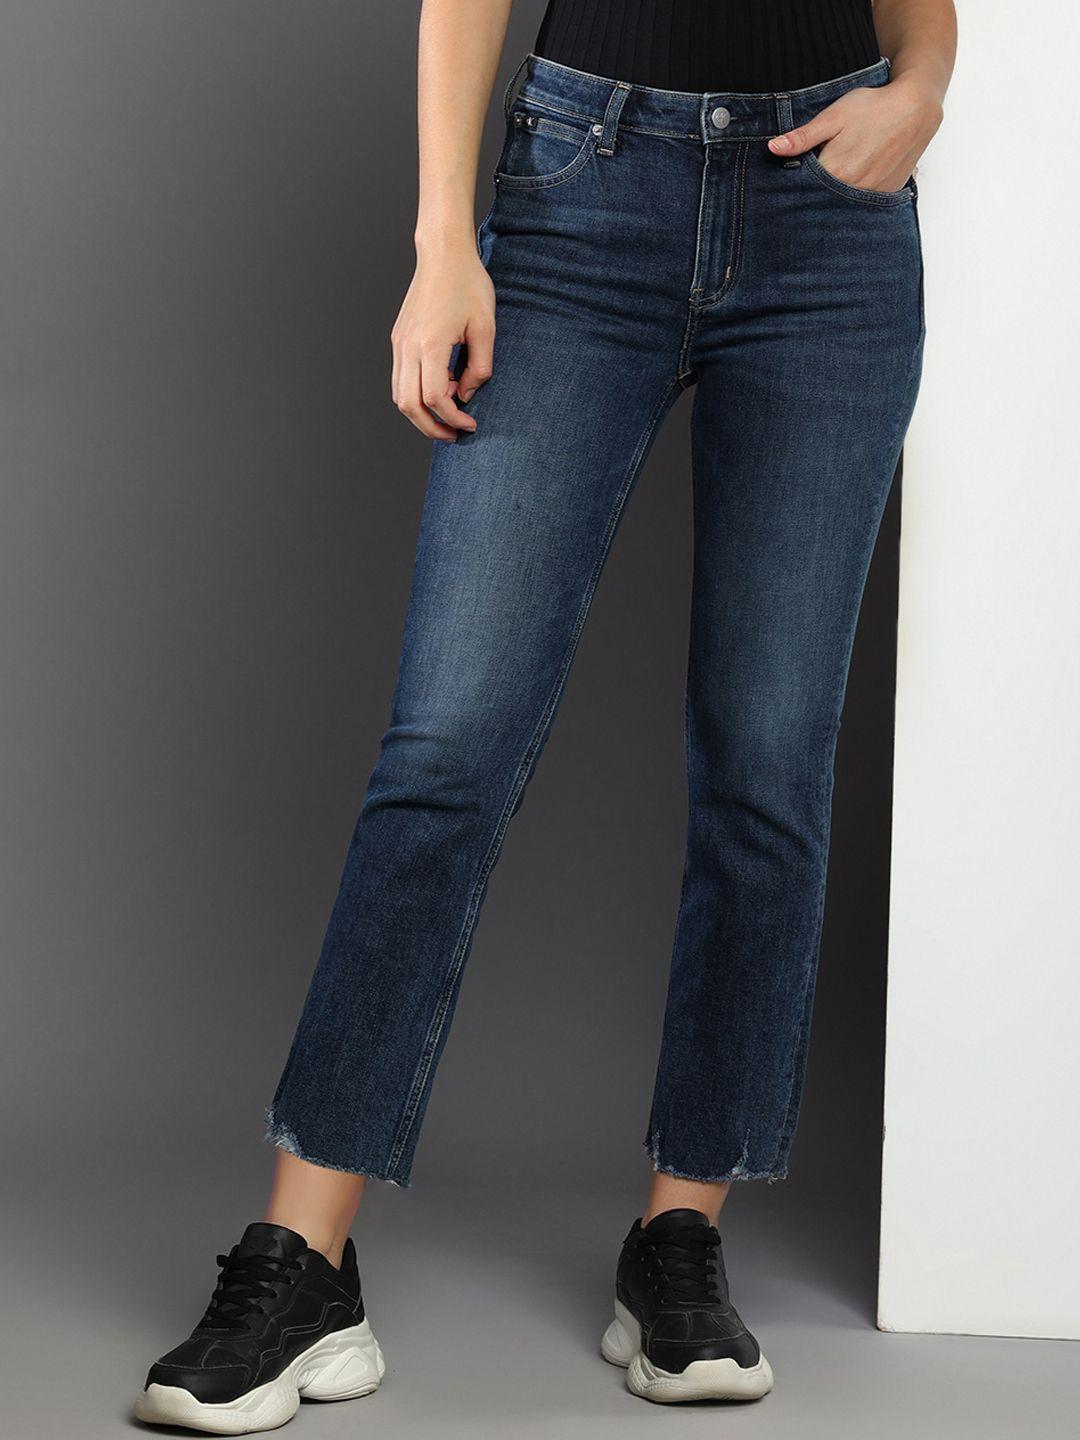 calvin-klein-jeans-women-slim-fit-high-rise-light-fade-jeans